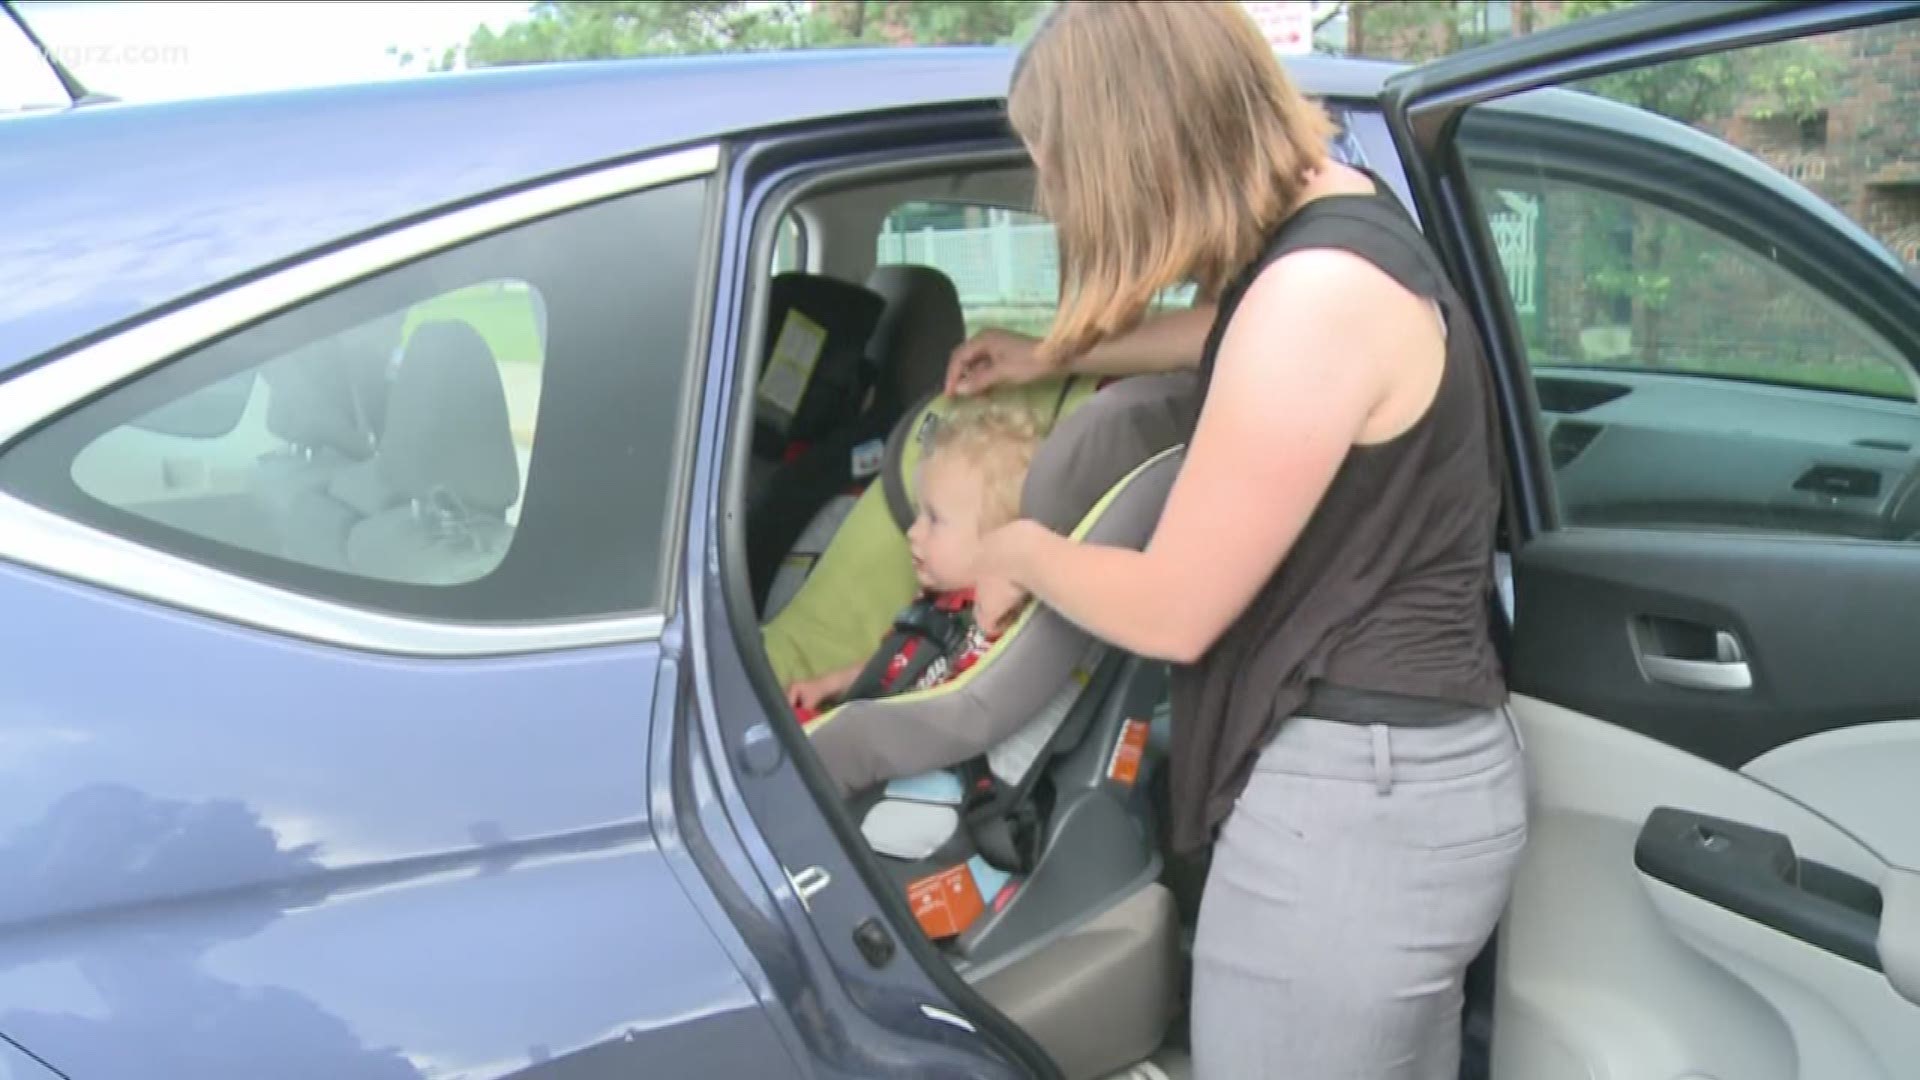 Pediatricians change car seat recommendations